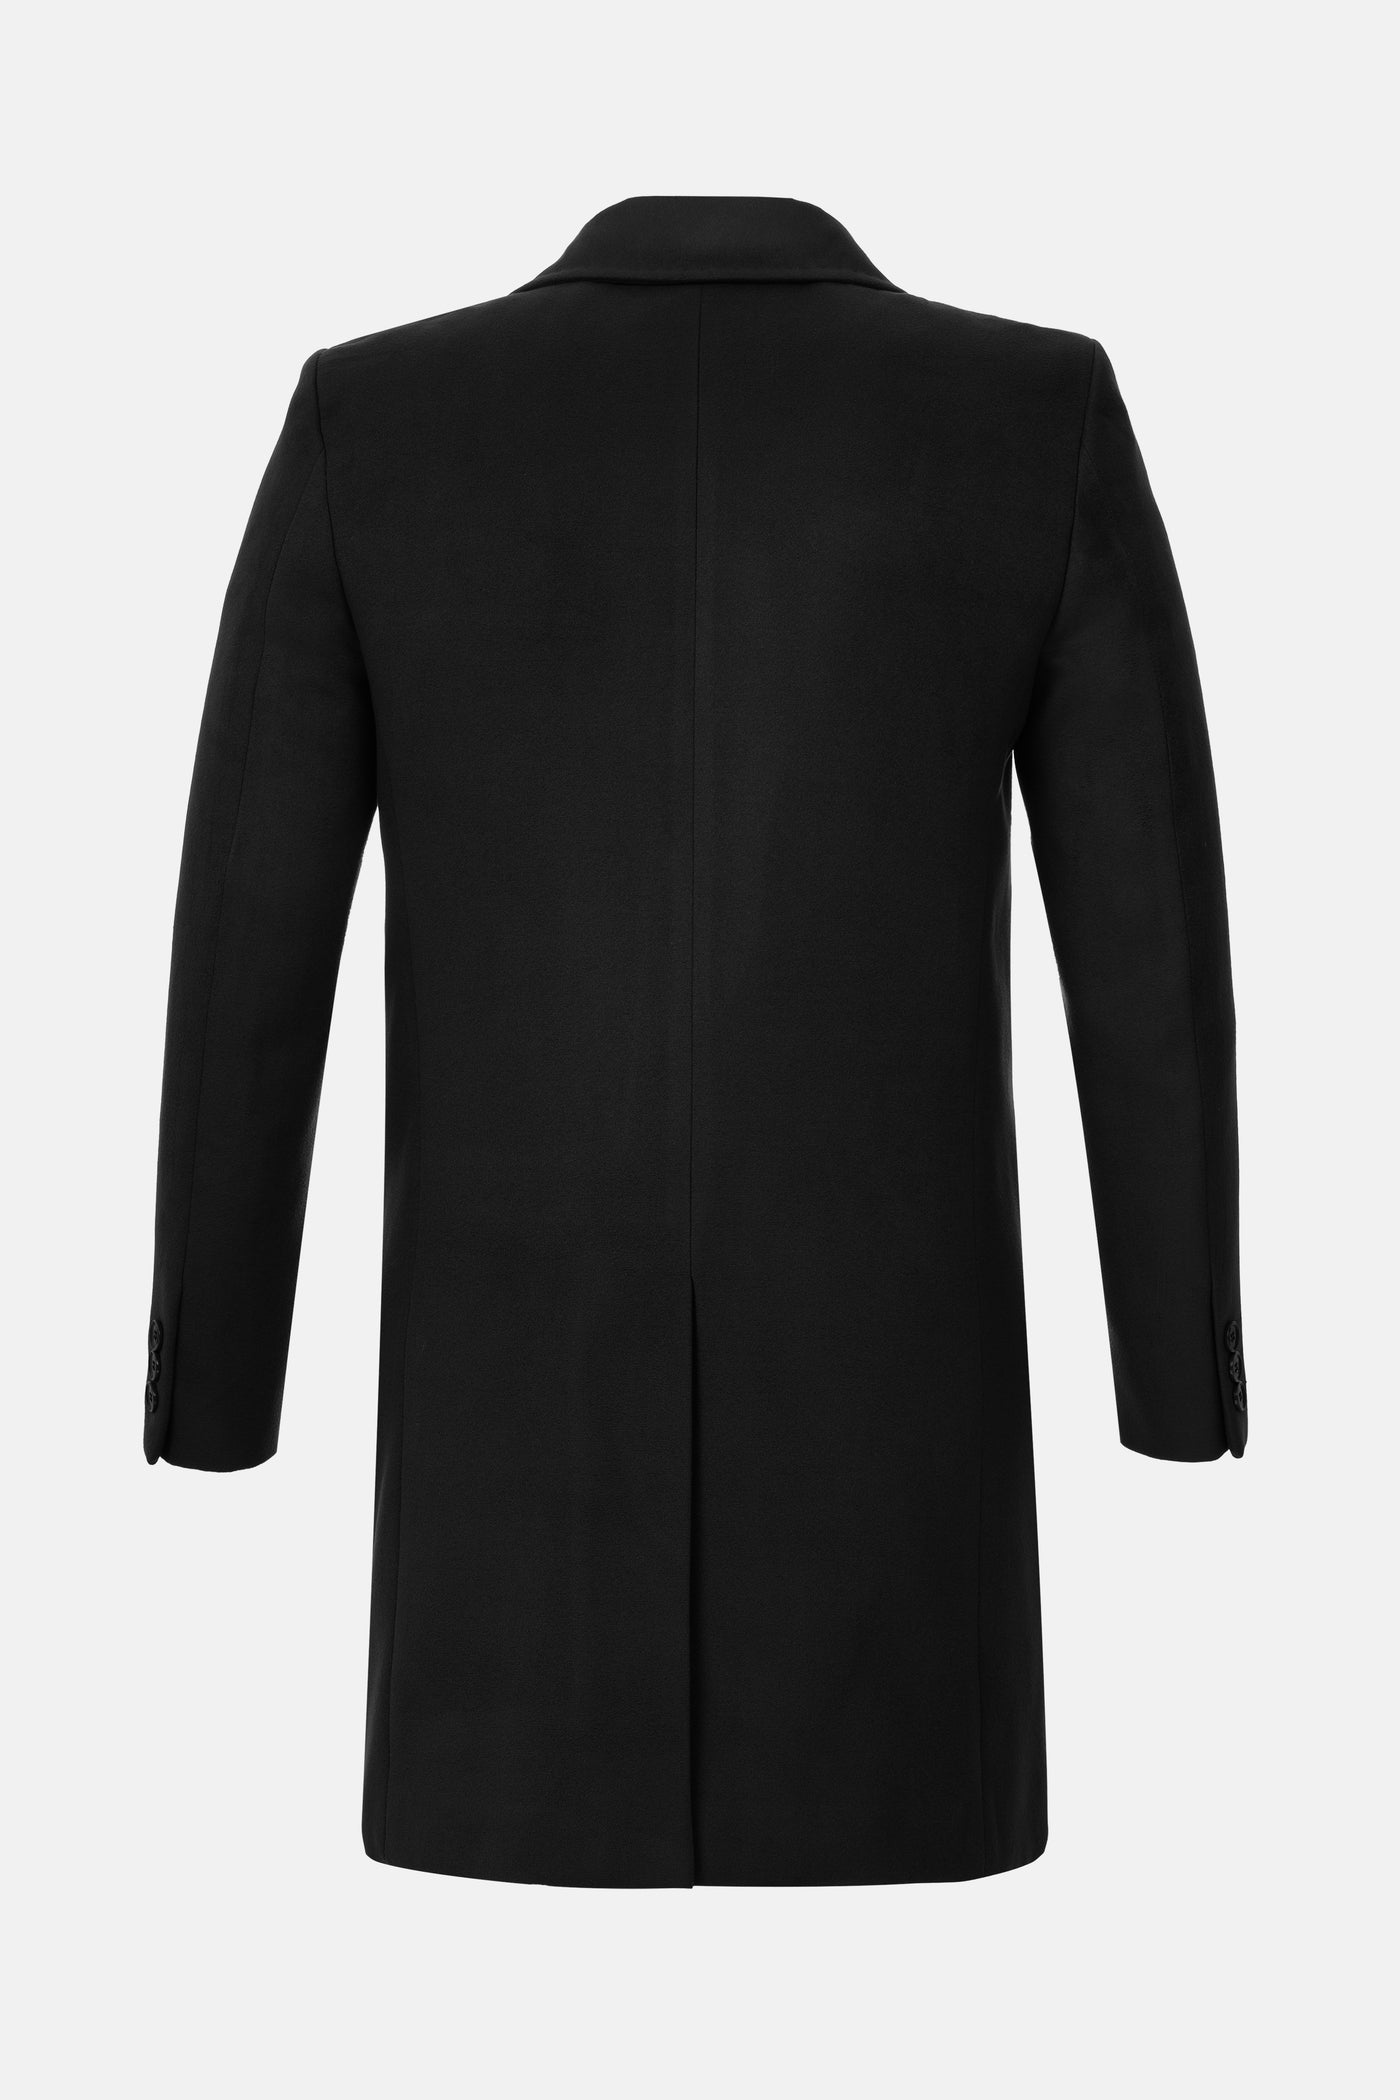 Mac Basic Long Dark Black Coat